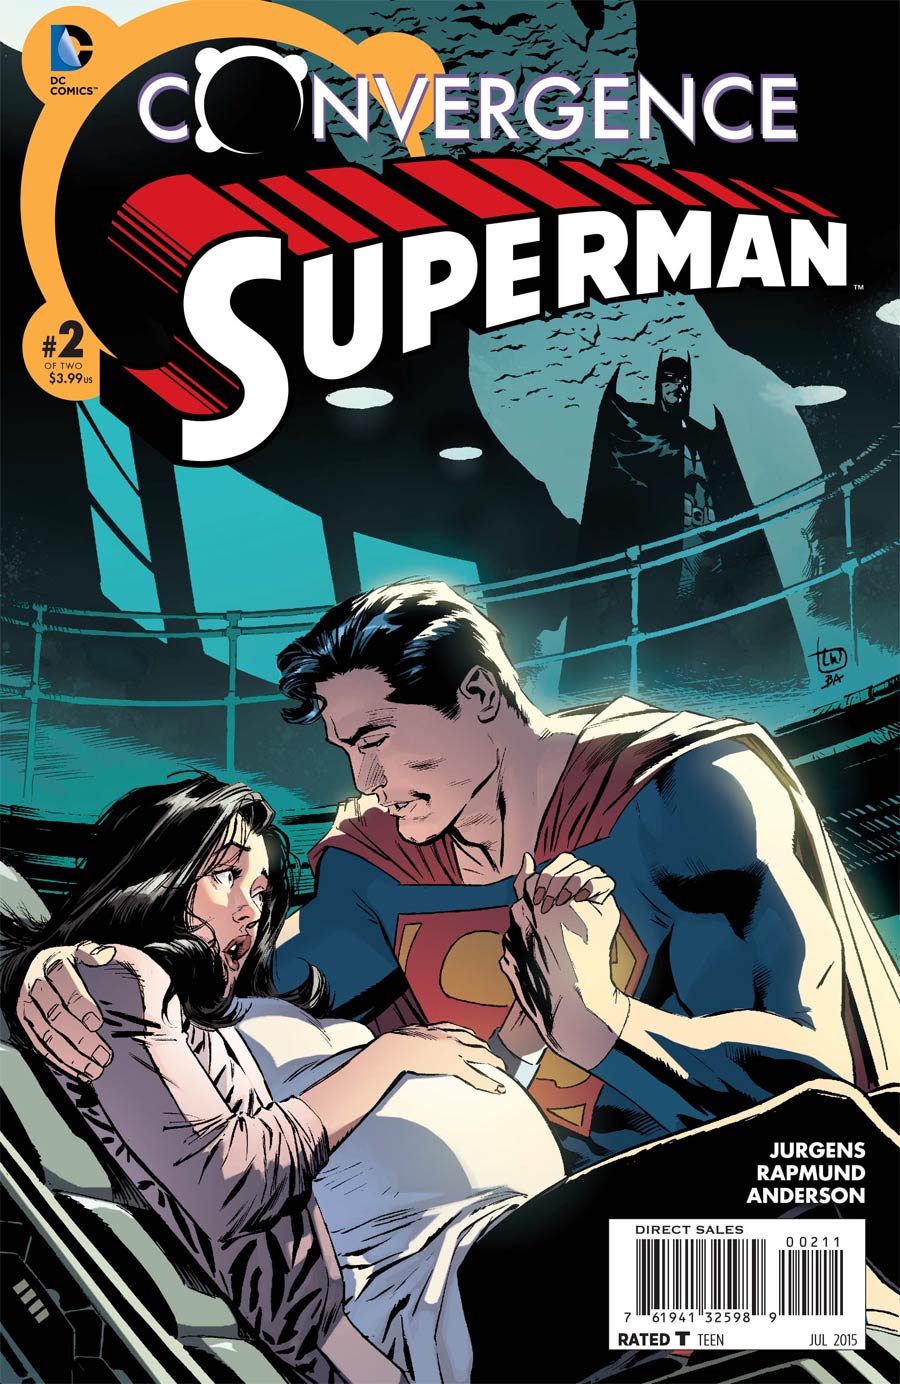 Convergence: Superman #2